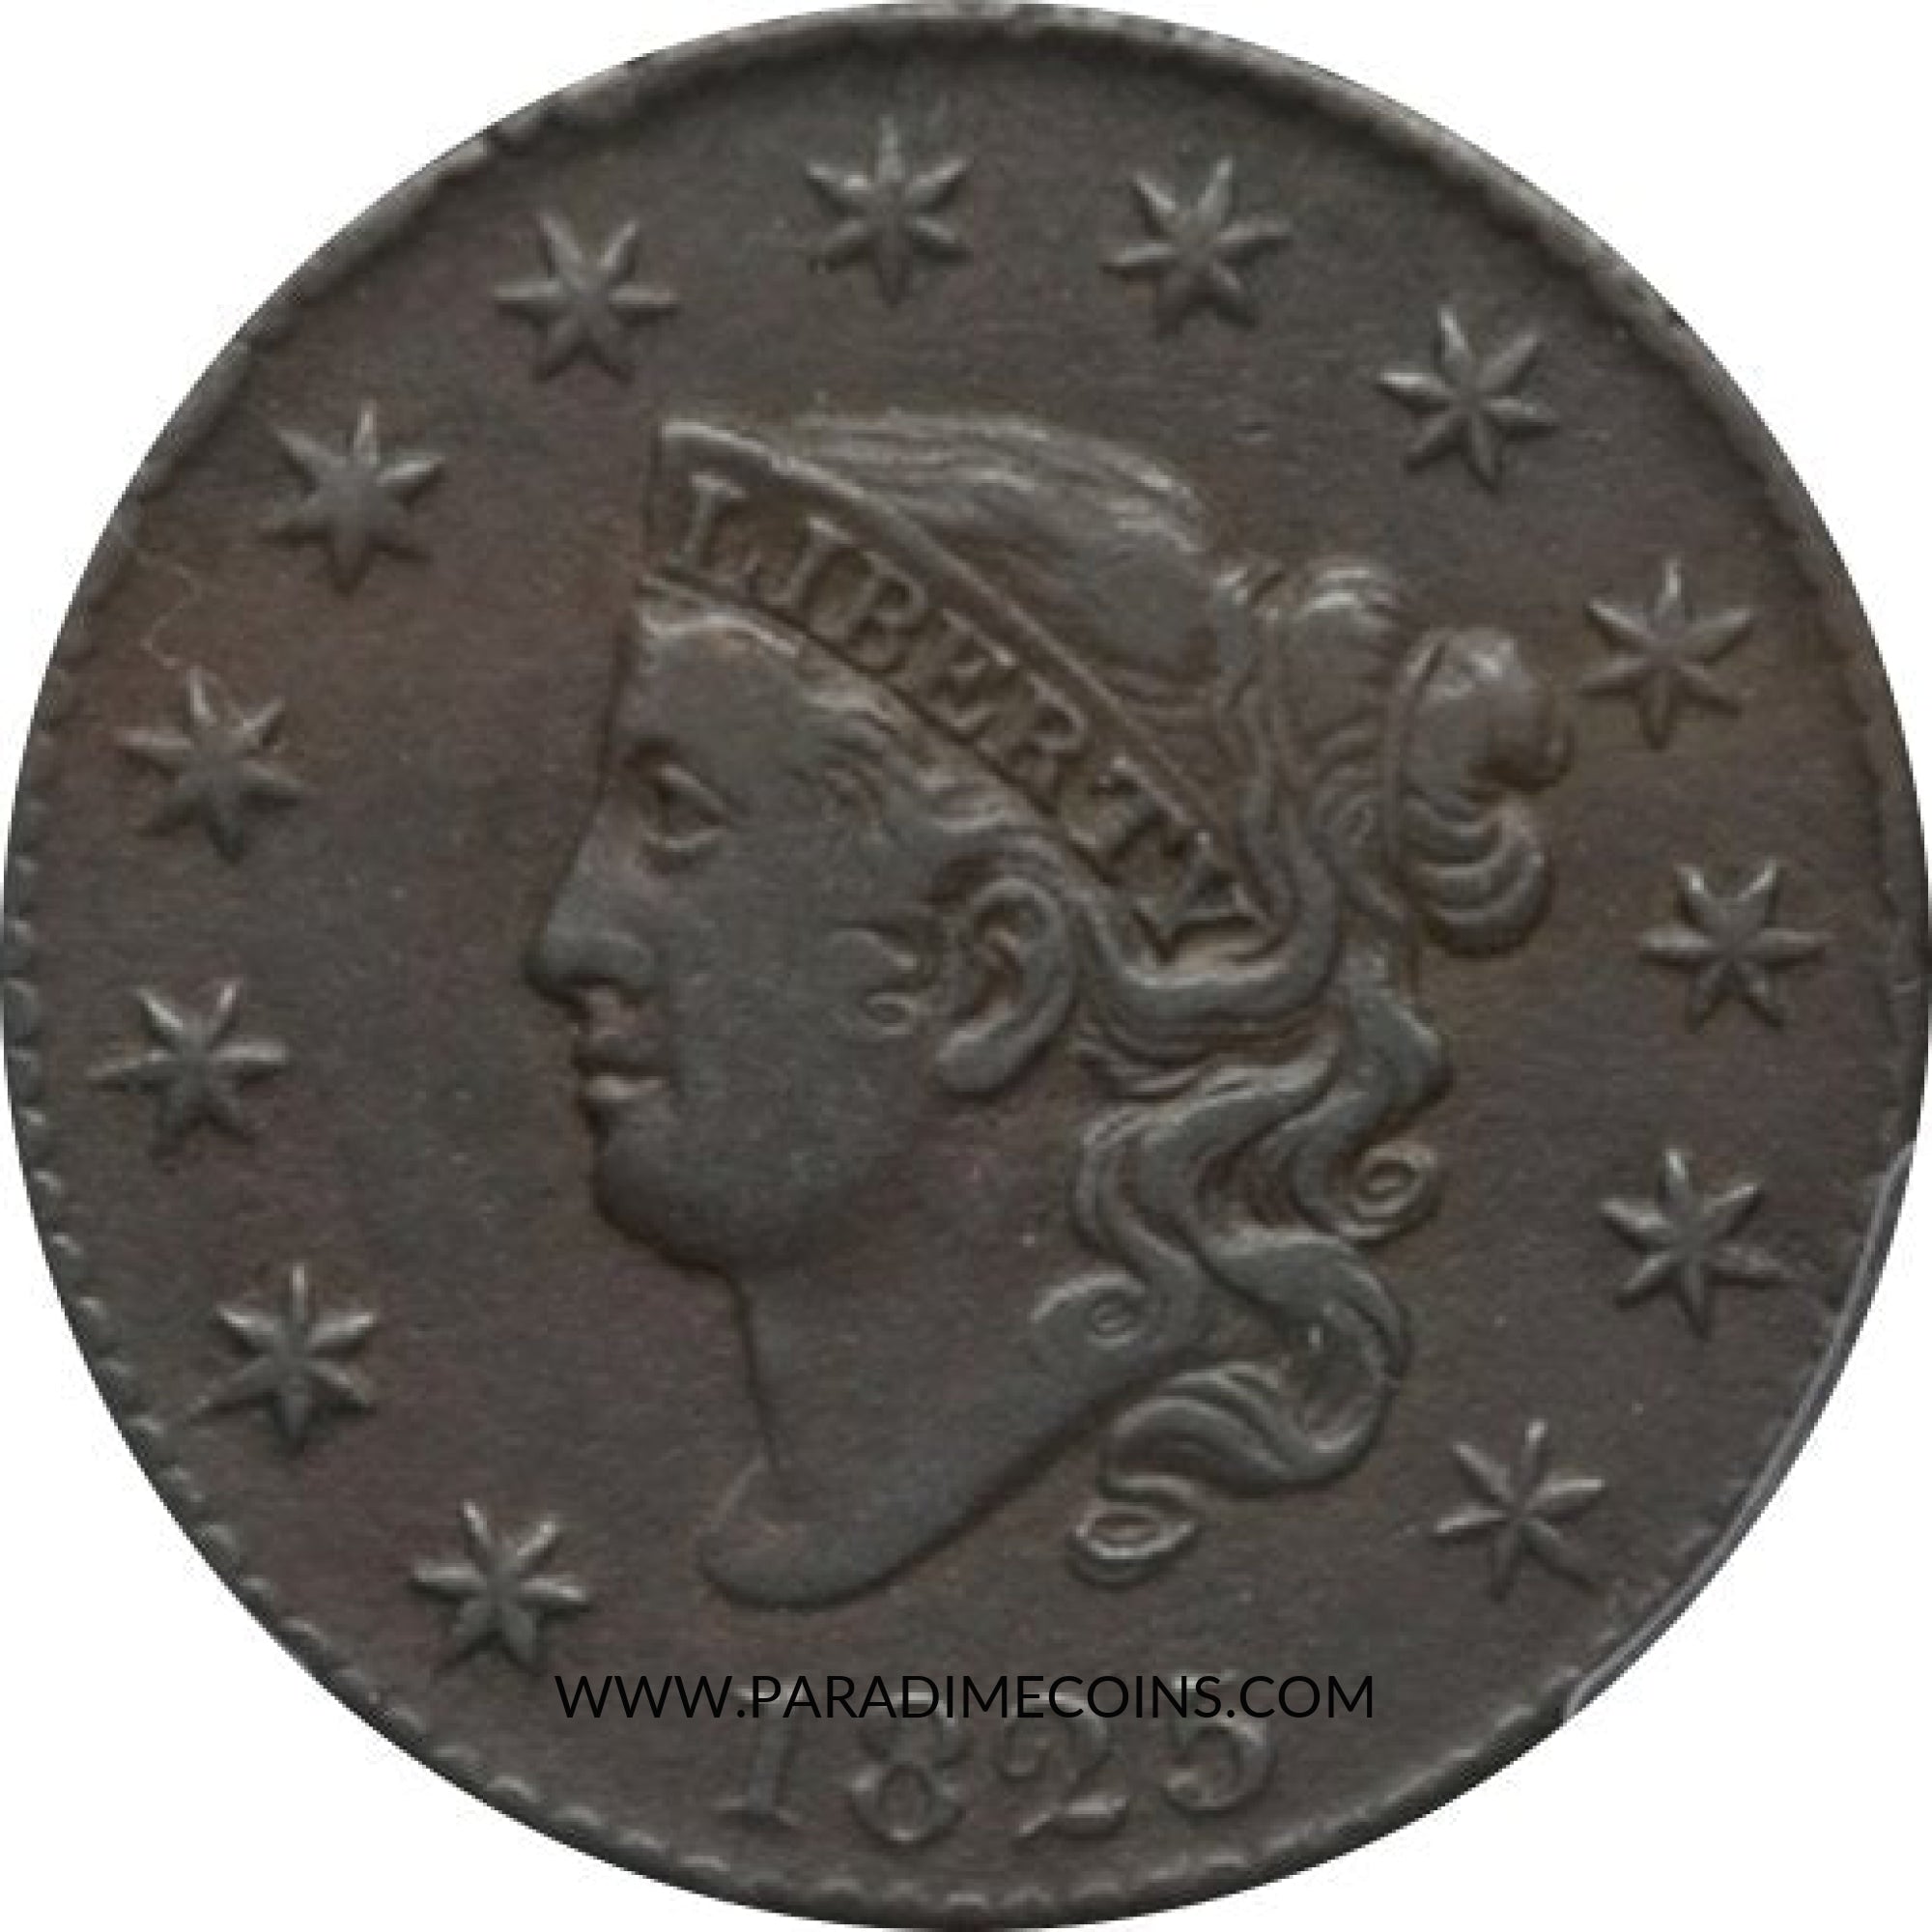 1825 1C VF25 PCGS - Paradime Coins | PCGS NGC CACG CAC Rare US Numismatic Coins For Sale